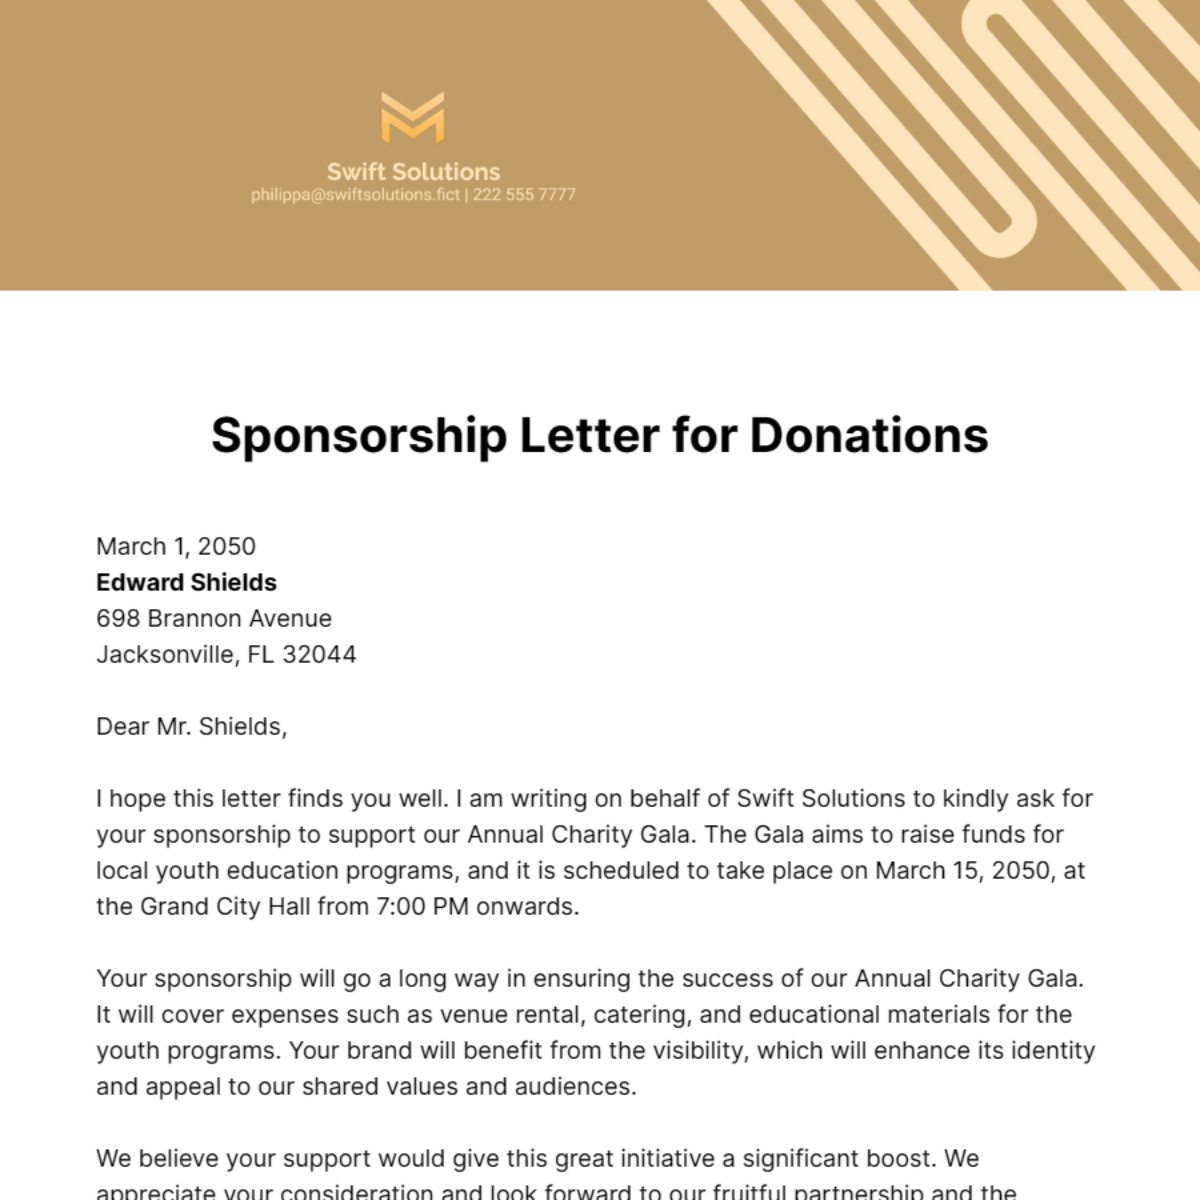 Sponsorship Letter for Donations Template